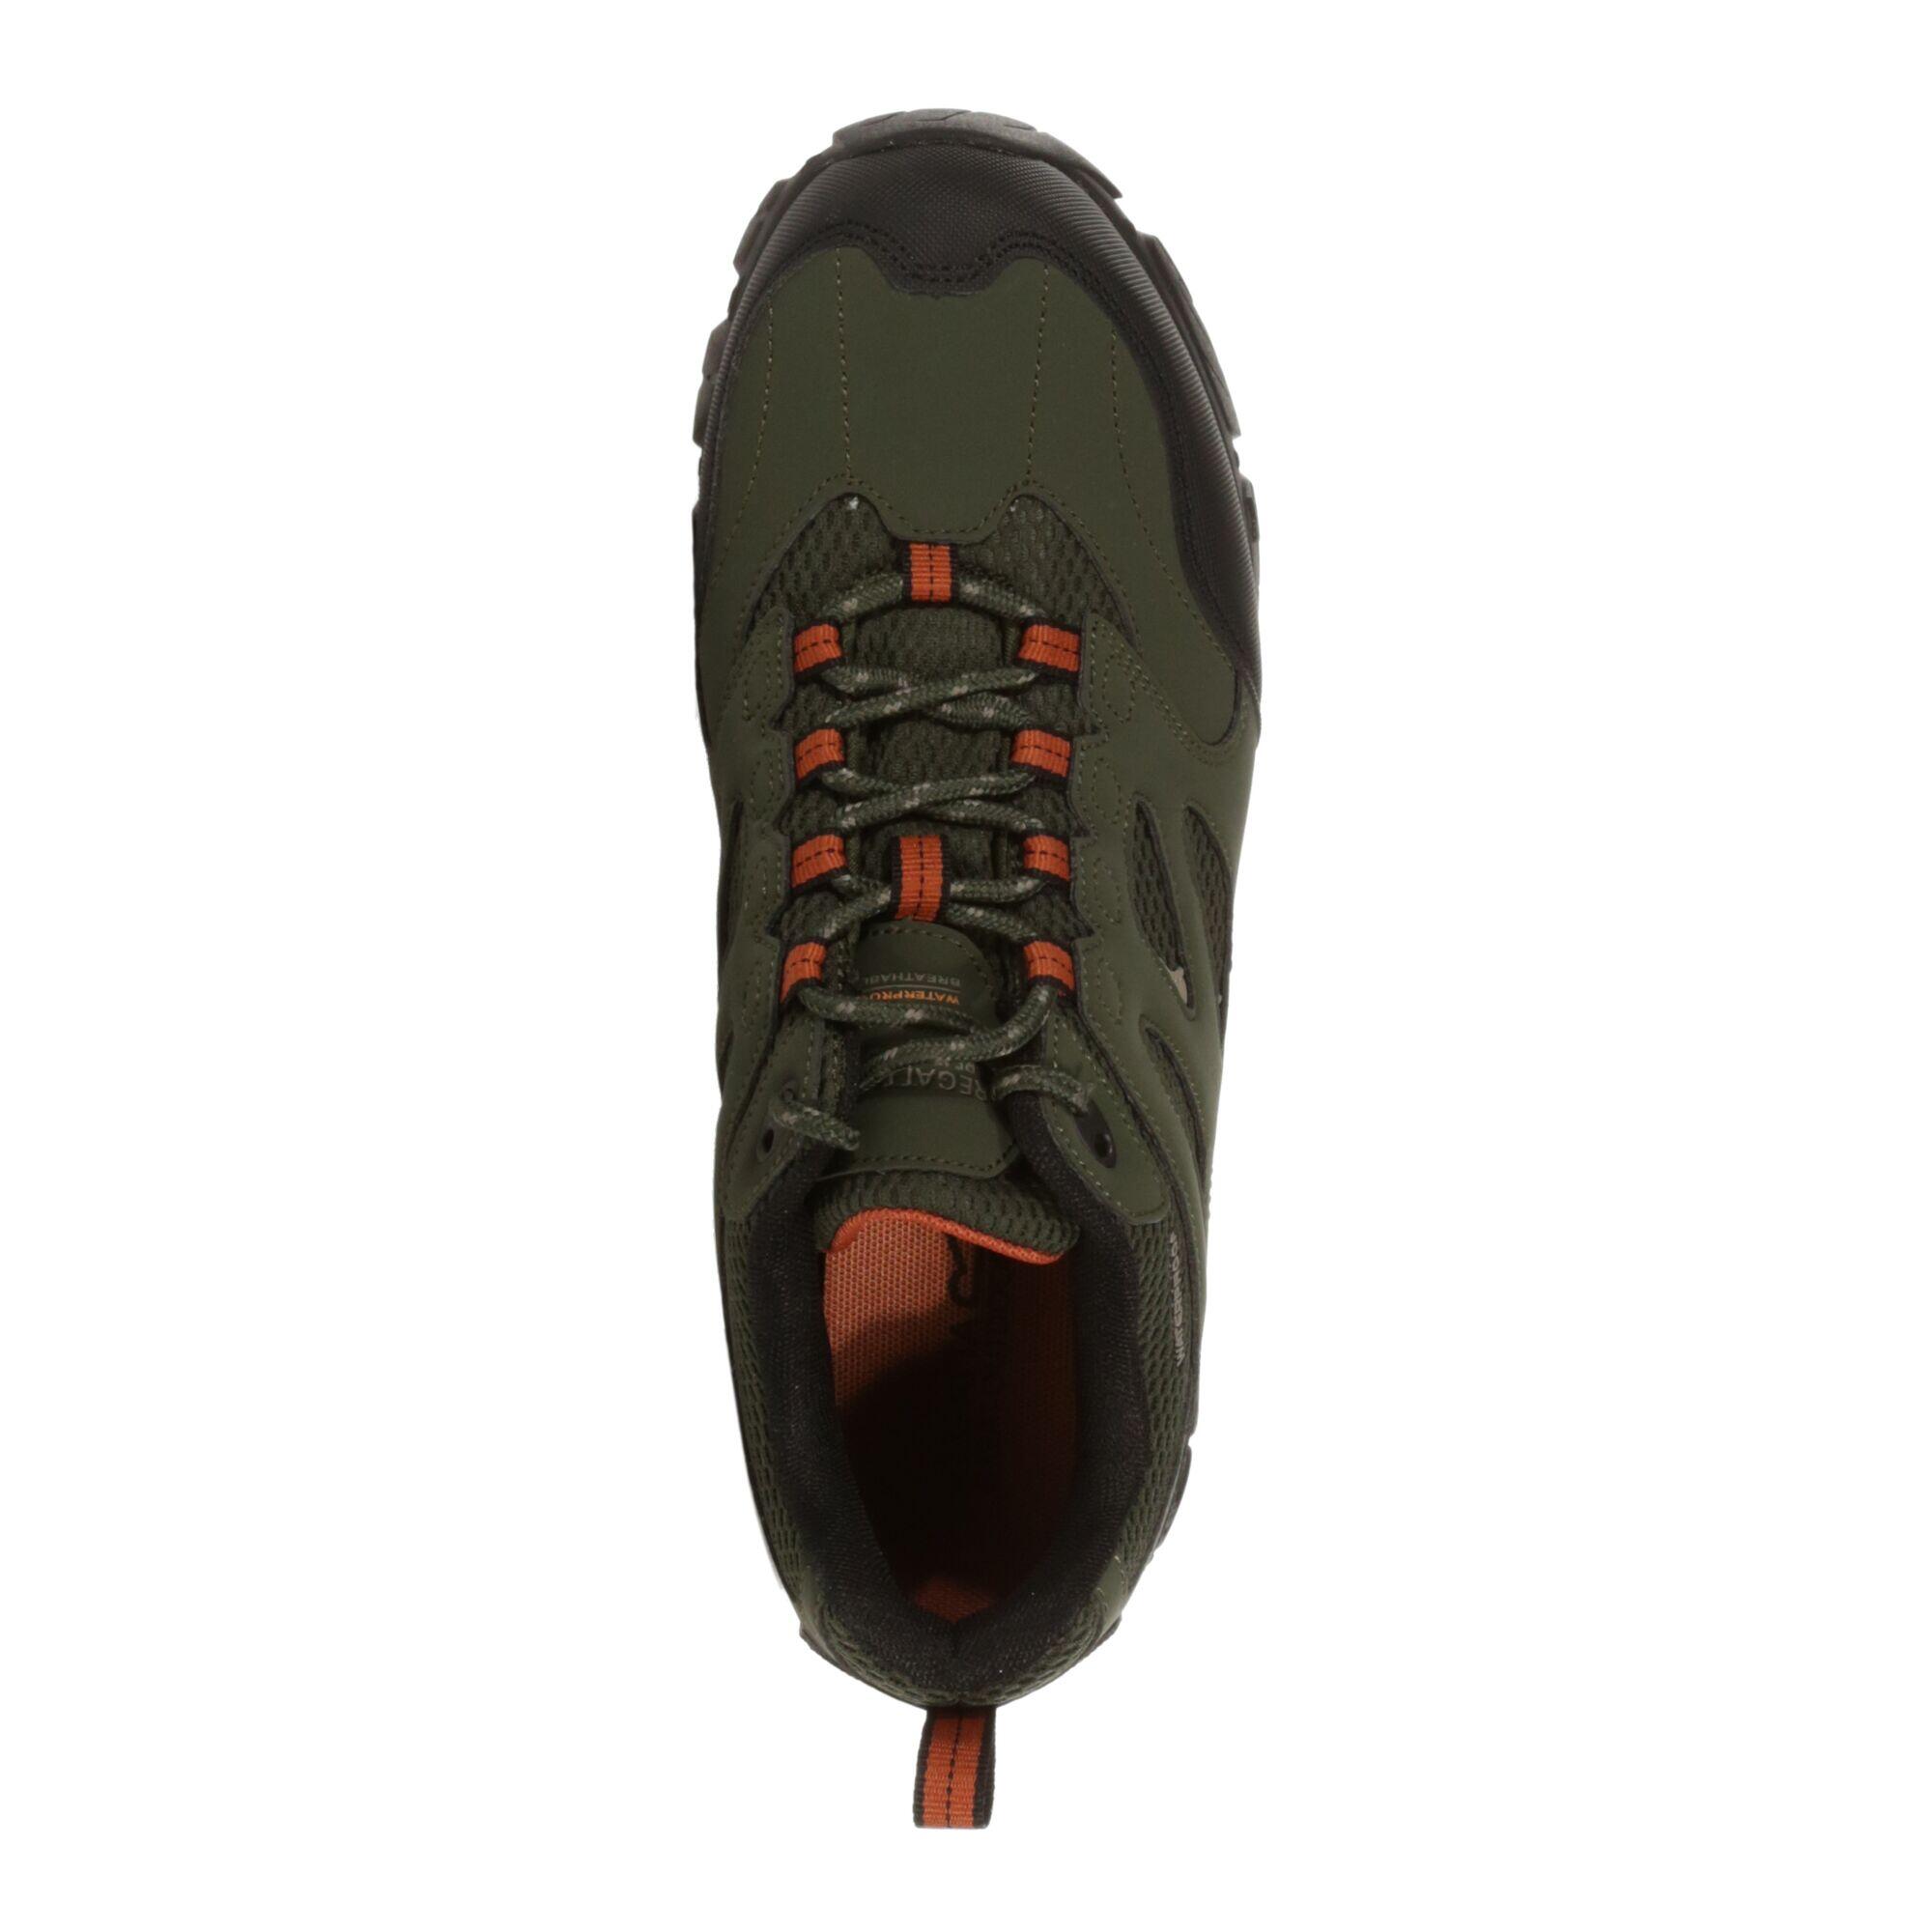 Holcombe IEP Low Men's Hiking Boots - Bayleaf Burnt Umber 3/5